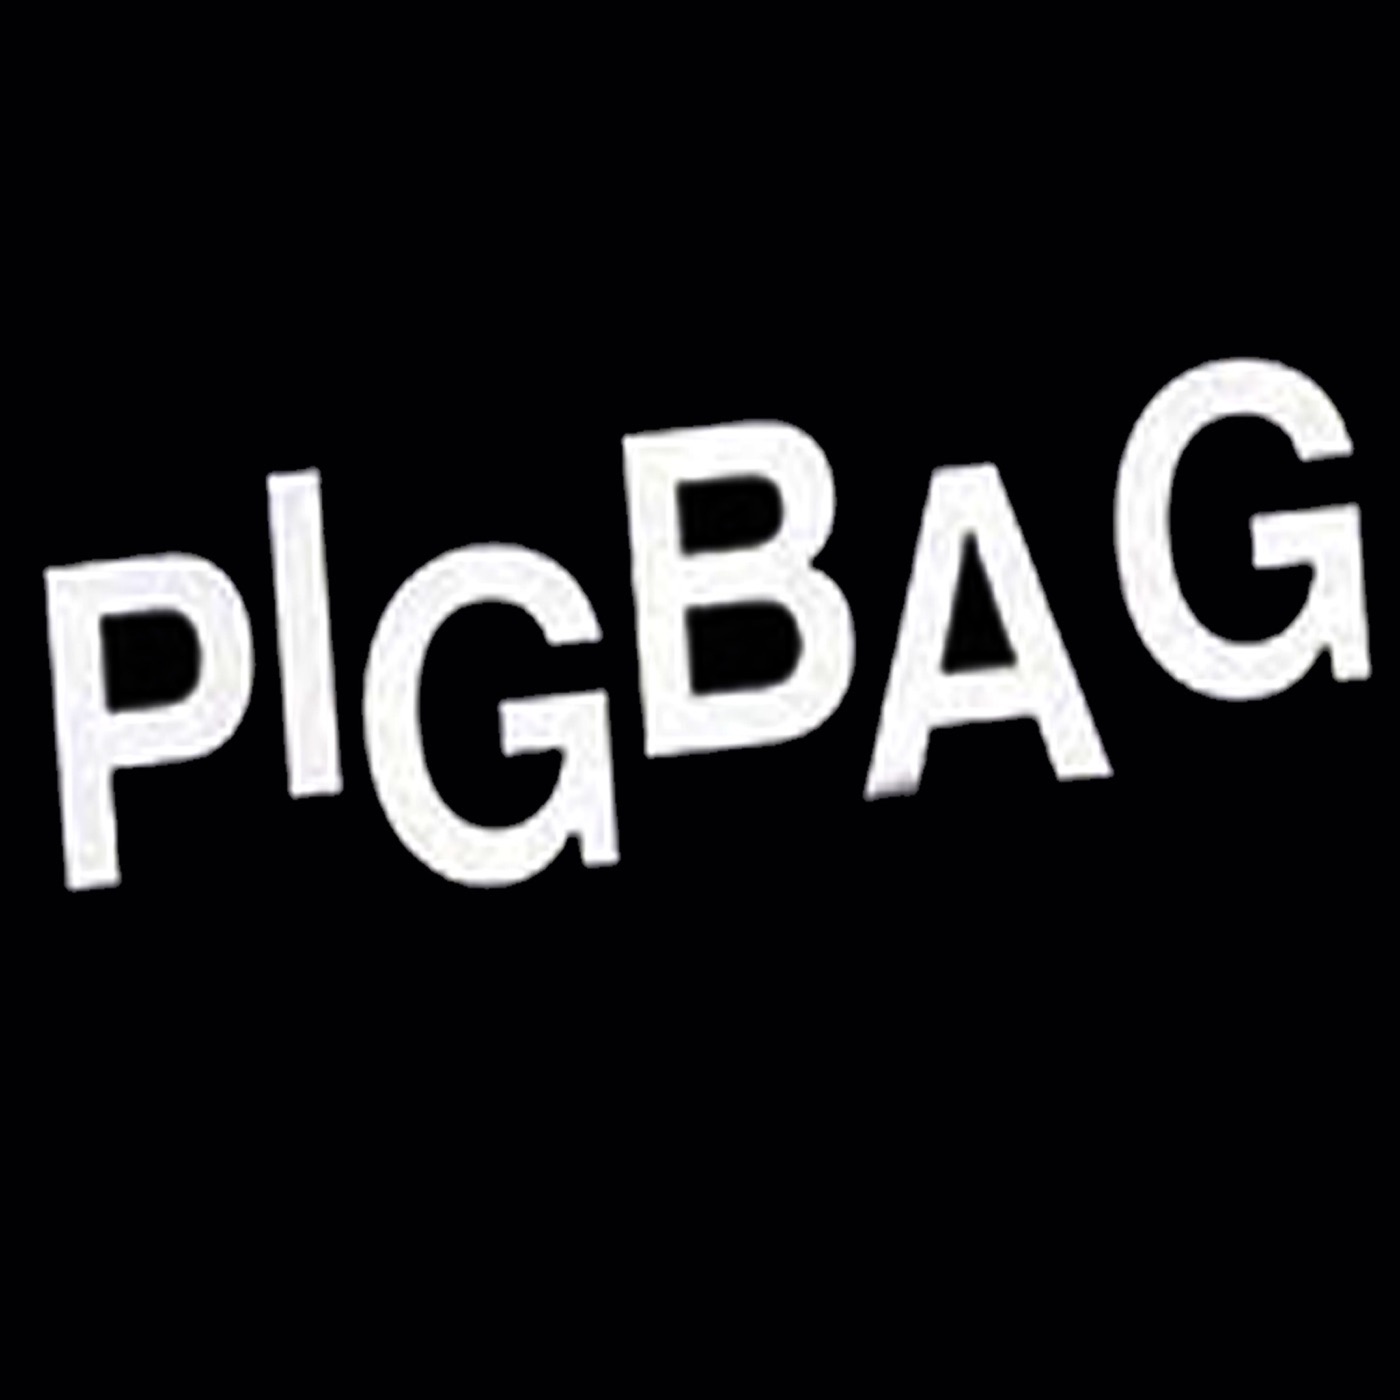 Pigbag - Papa's Got A Brand New Pigbag